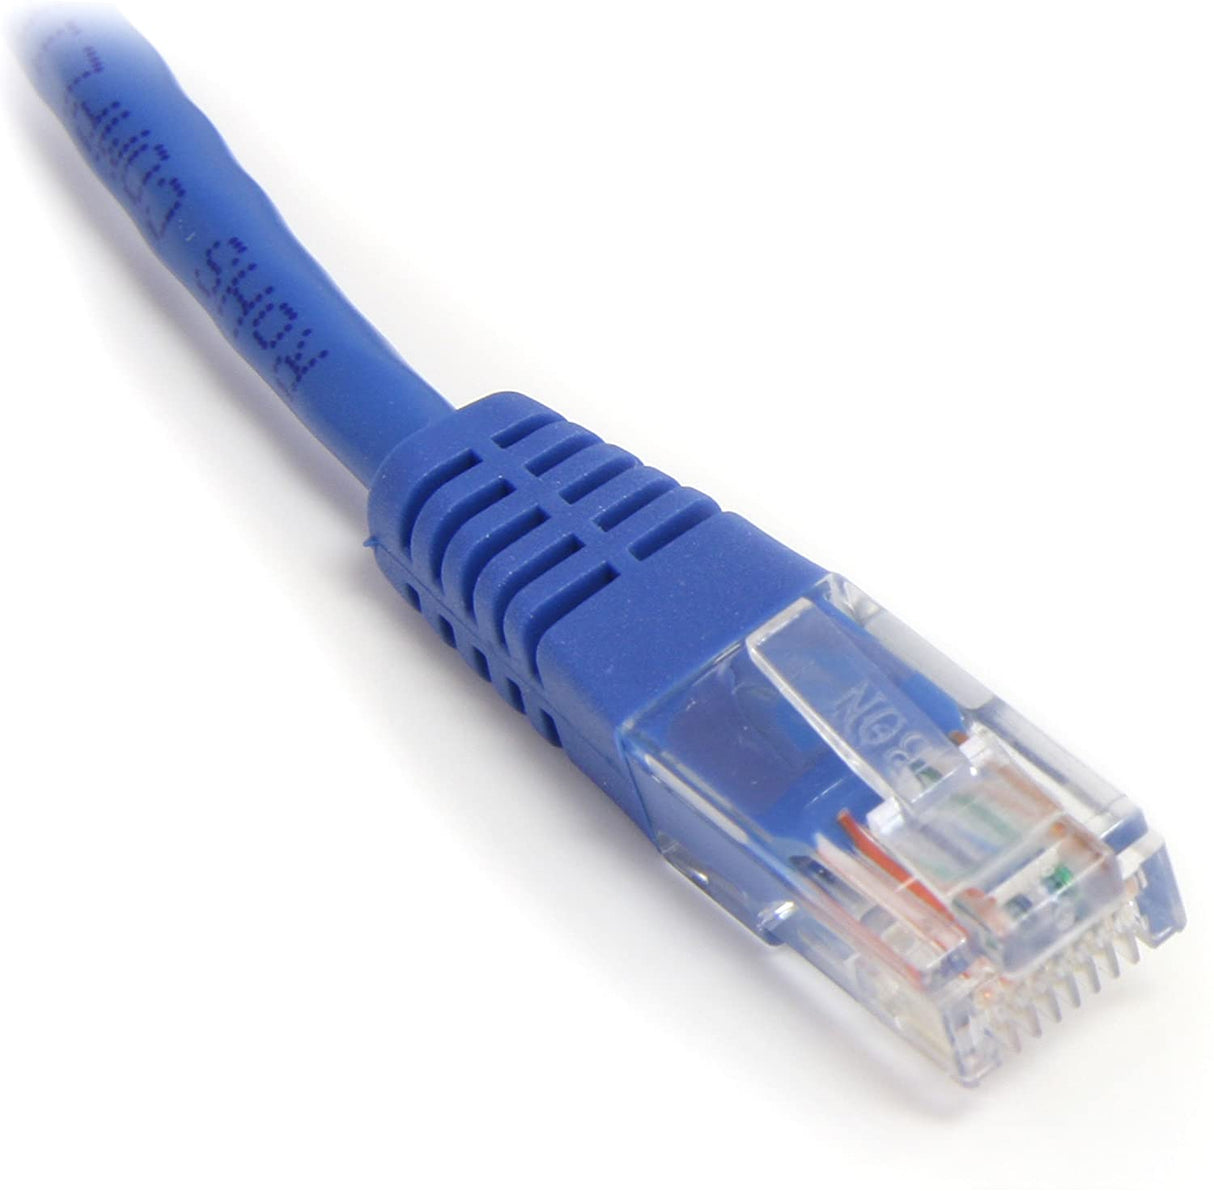 StarTech.com Cat5e Ethernet Cable - 1 ft - Blue - Patch Cable - Molded Cat5e Cable - Short Network Cable - Ethernet Cord - Cat 5e Cable - 1ft (M45PATCH1BL) 1 ft / 30cm Blue